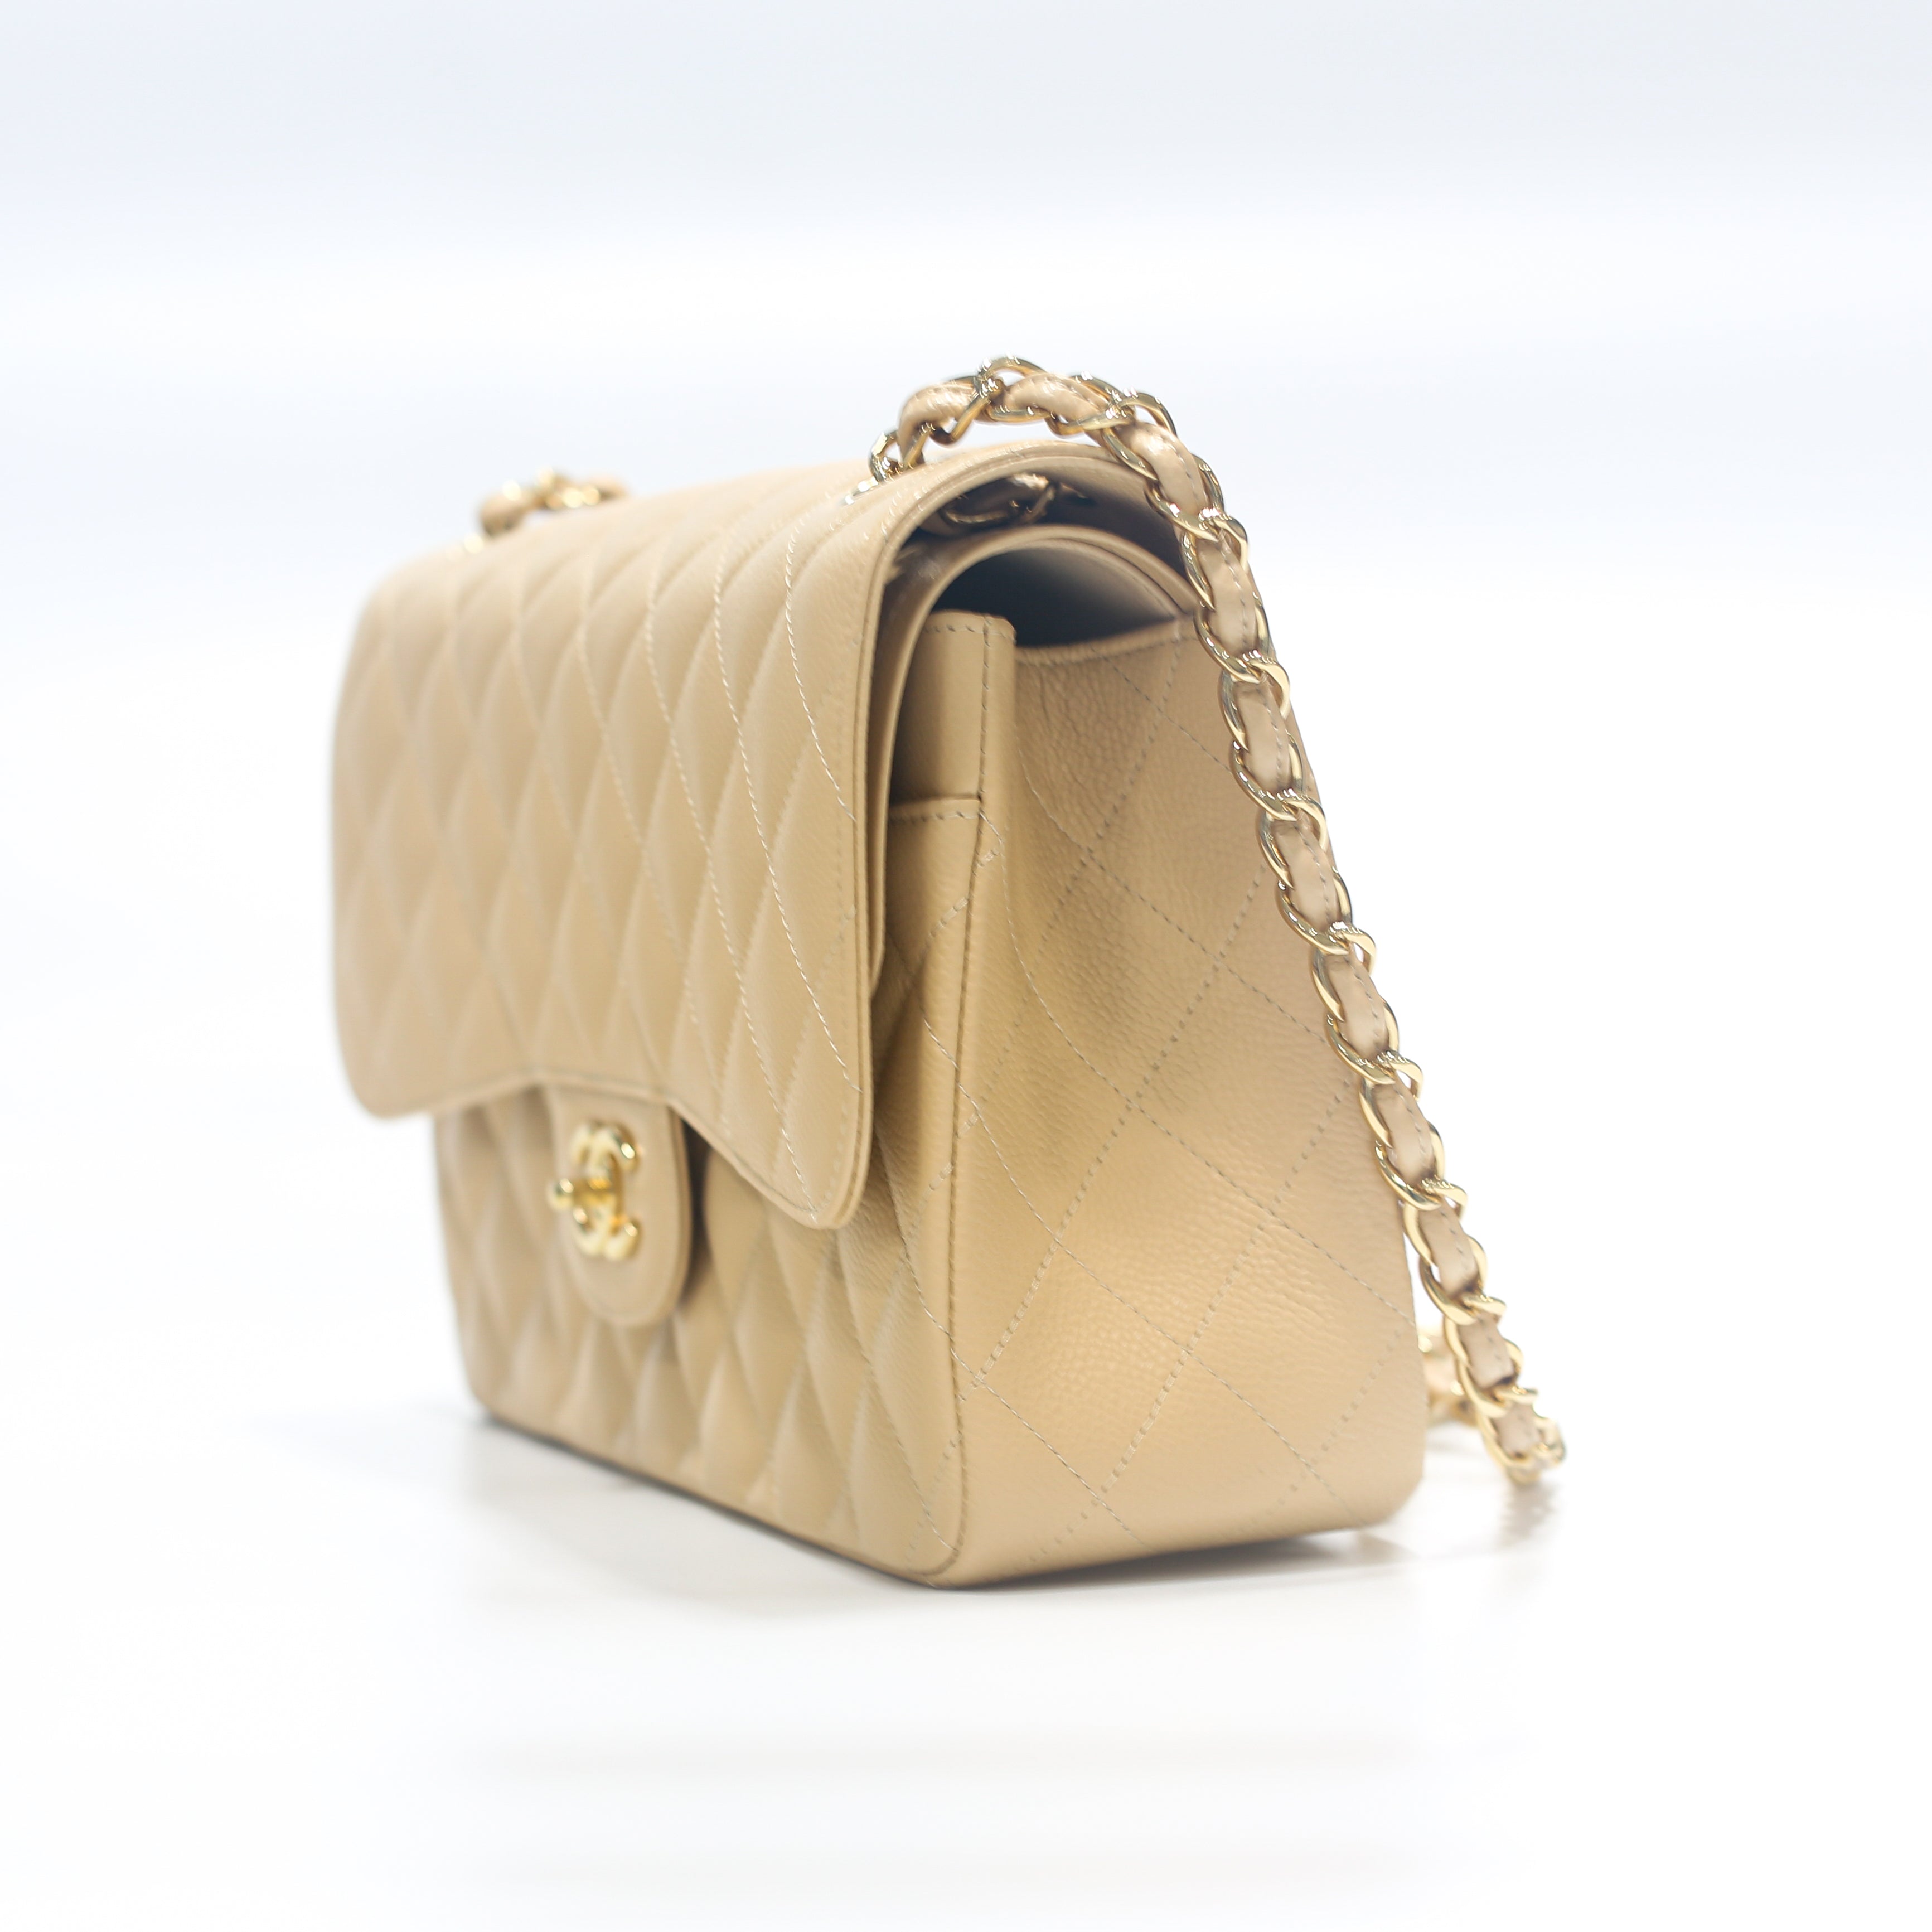 Sold at Auction: Chanel Beige Caviar Classic Double Flap Handbag